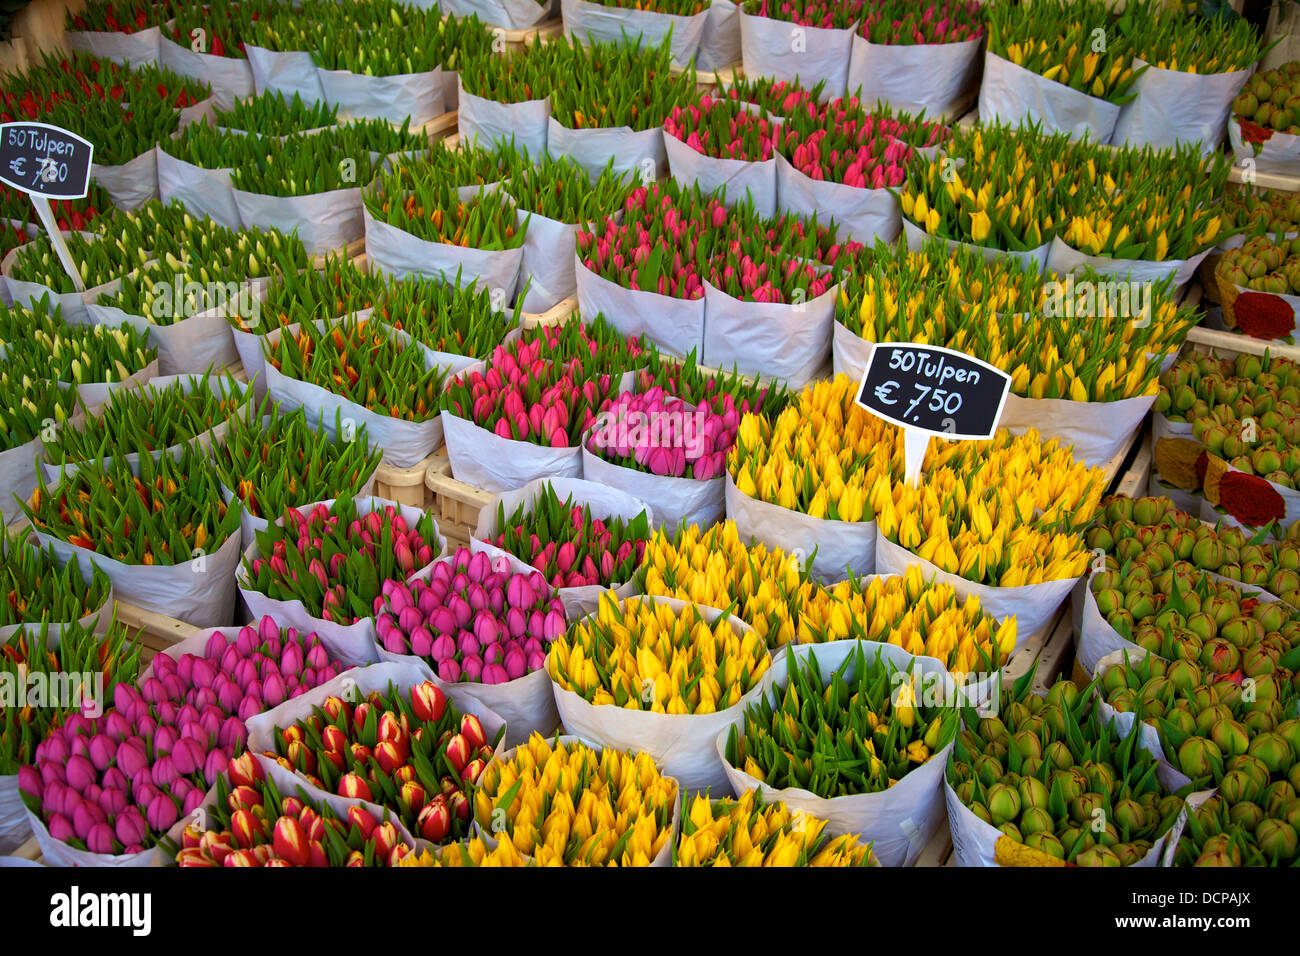 Bloemenmarkt Flower Market, Amsterdam, Netherlands, Europe Stock Photo